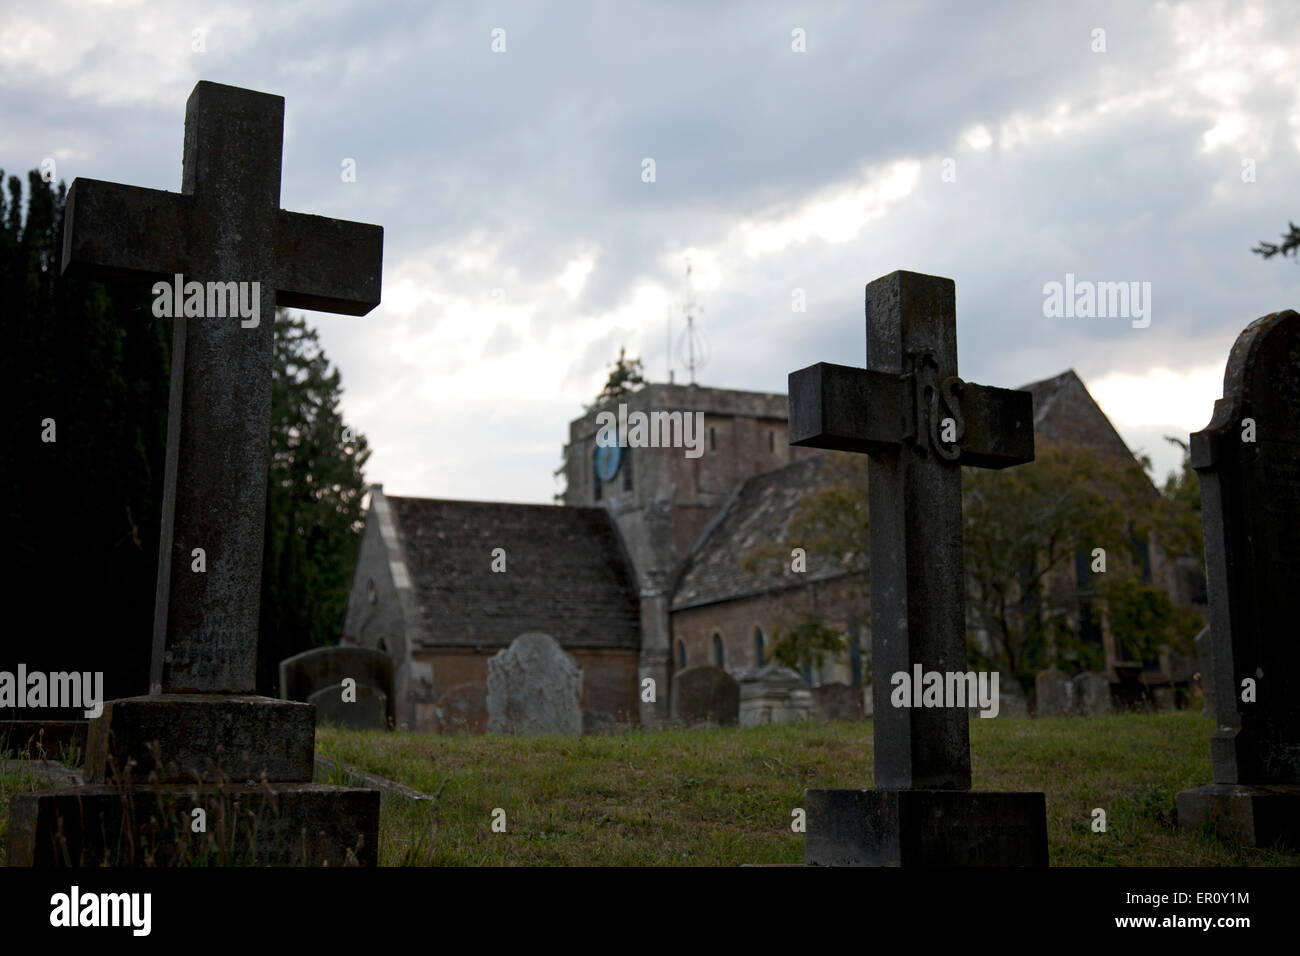 Gravestones at All Saints Church, Faringdon, Oxfordshire, with overcast sky Stock Photo